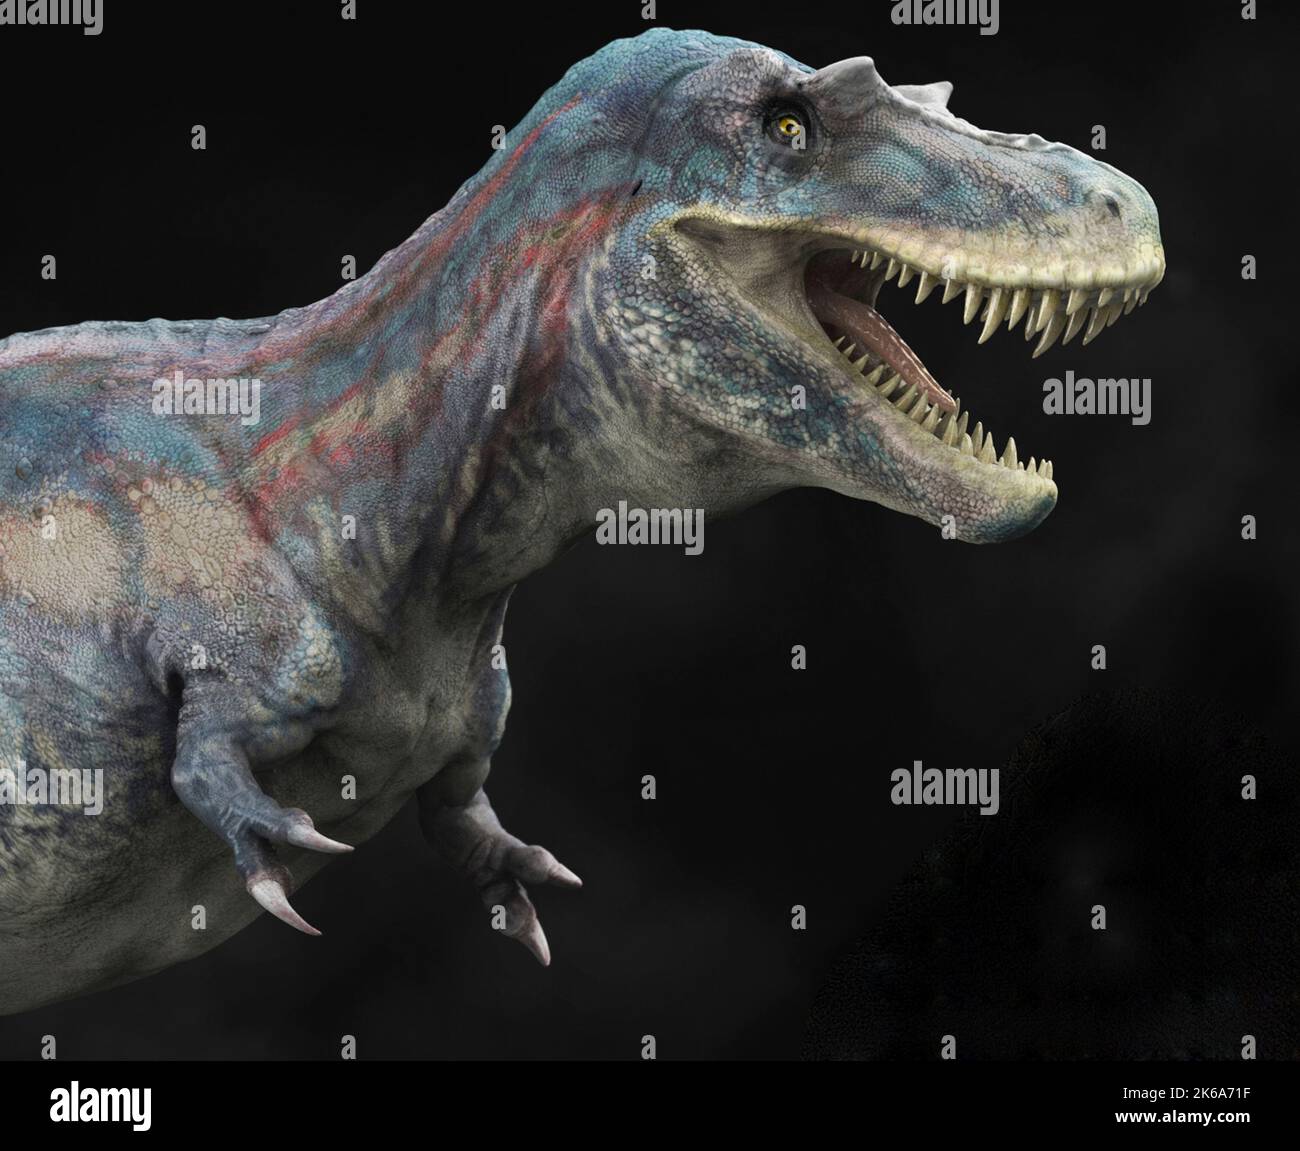 Albertosaurus dinosaure, vue du profil. Banque D'Images